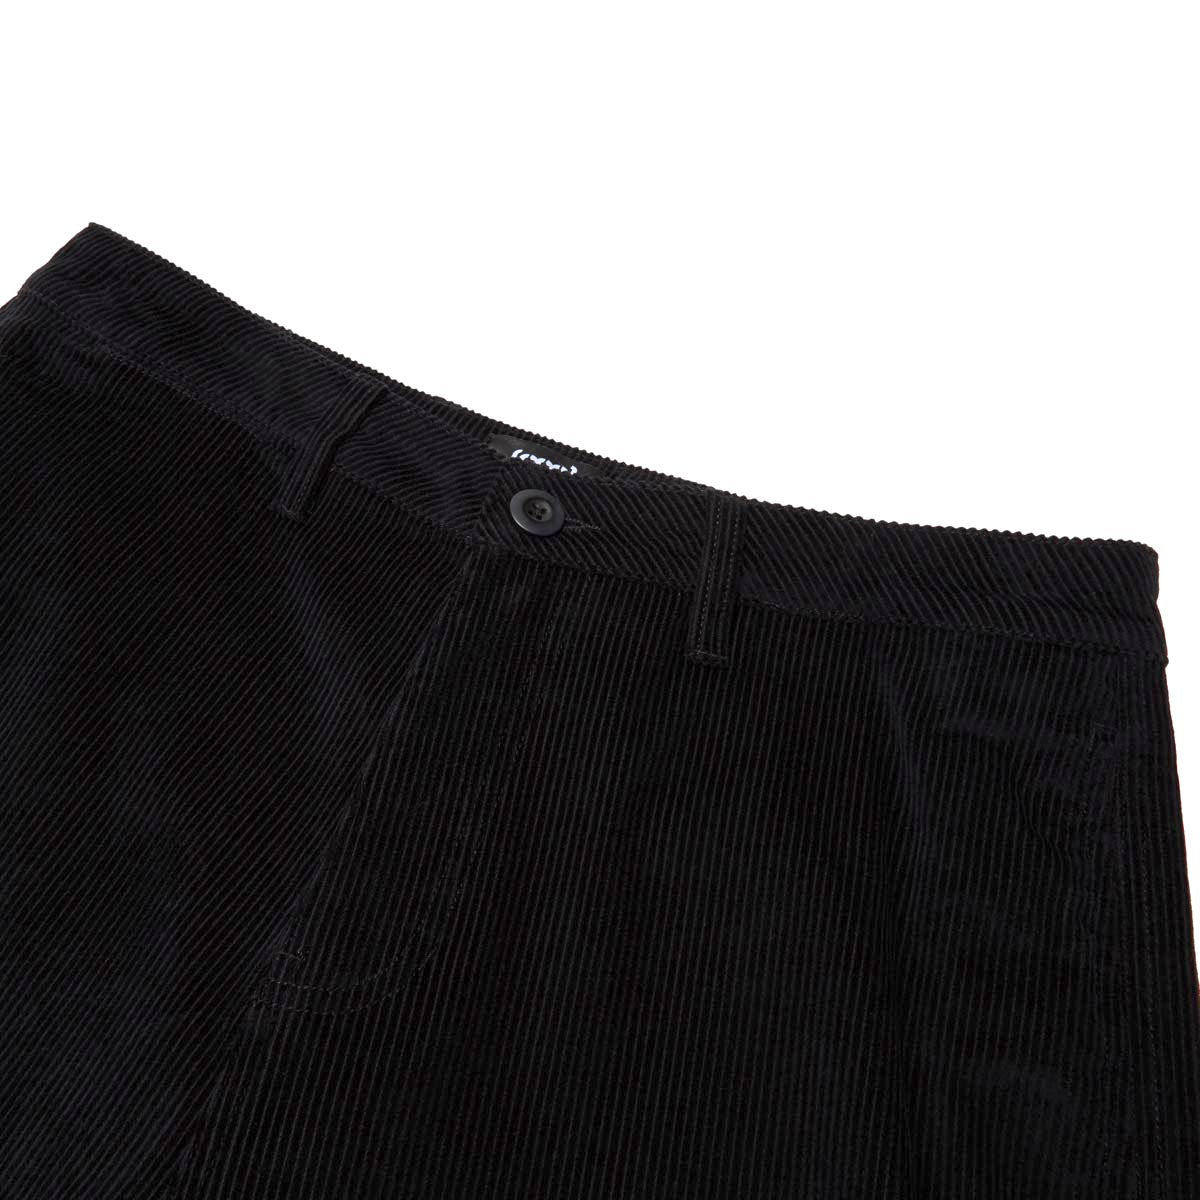 CCS Baggy Taper Corduroy Pants - Black image 7